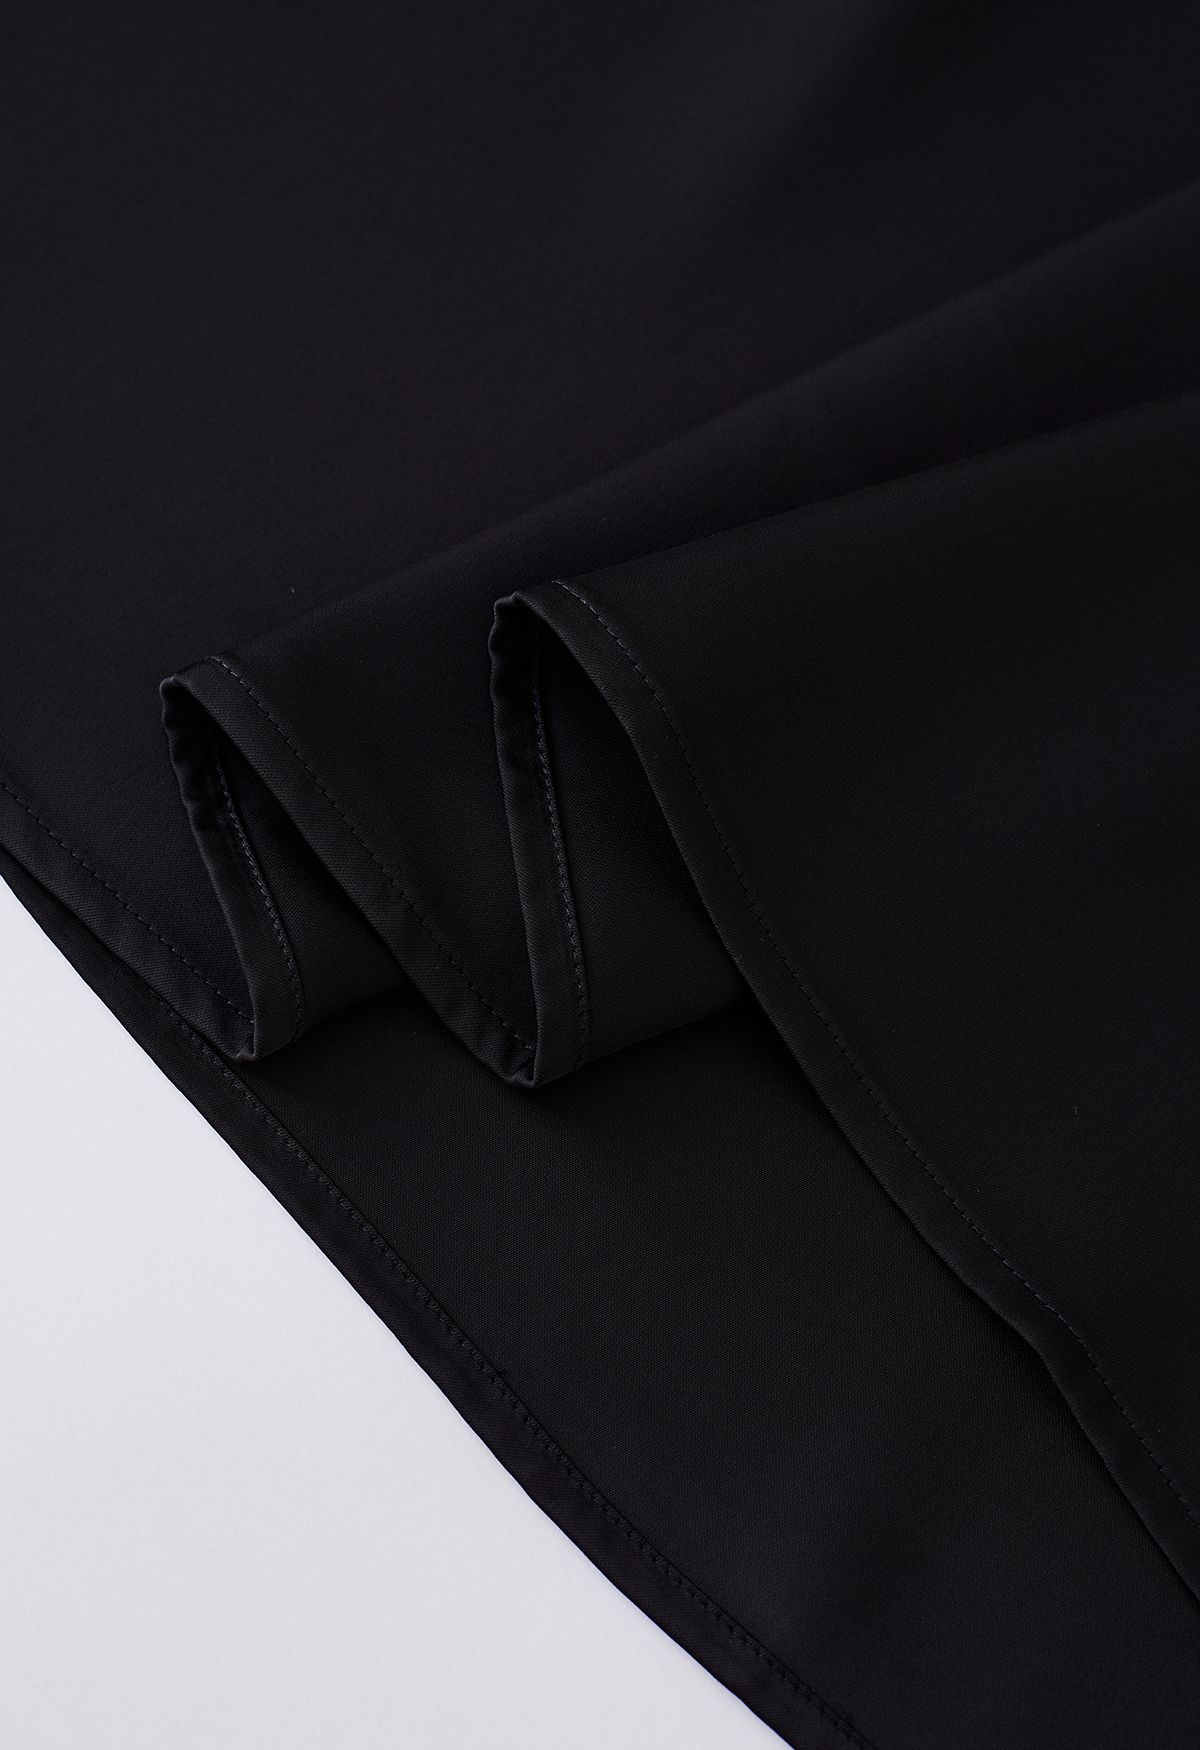 Elastic Drawstring Waist Satin Maxi Skirt in Black